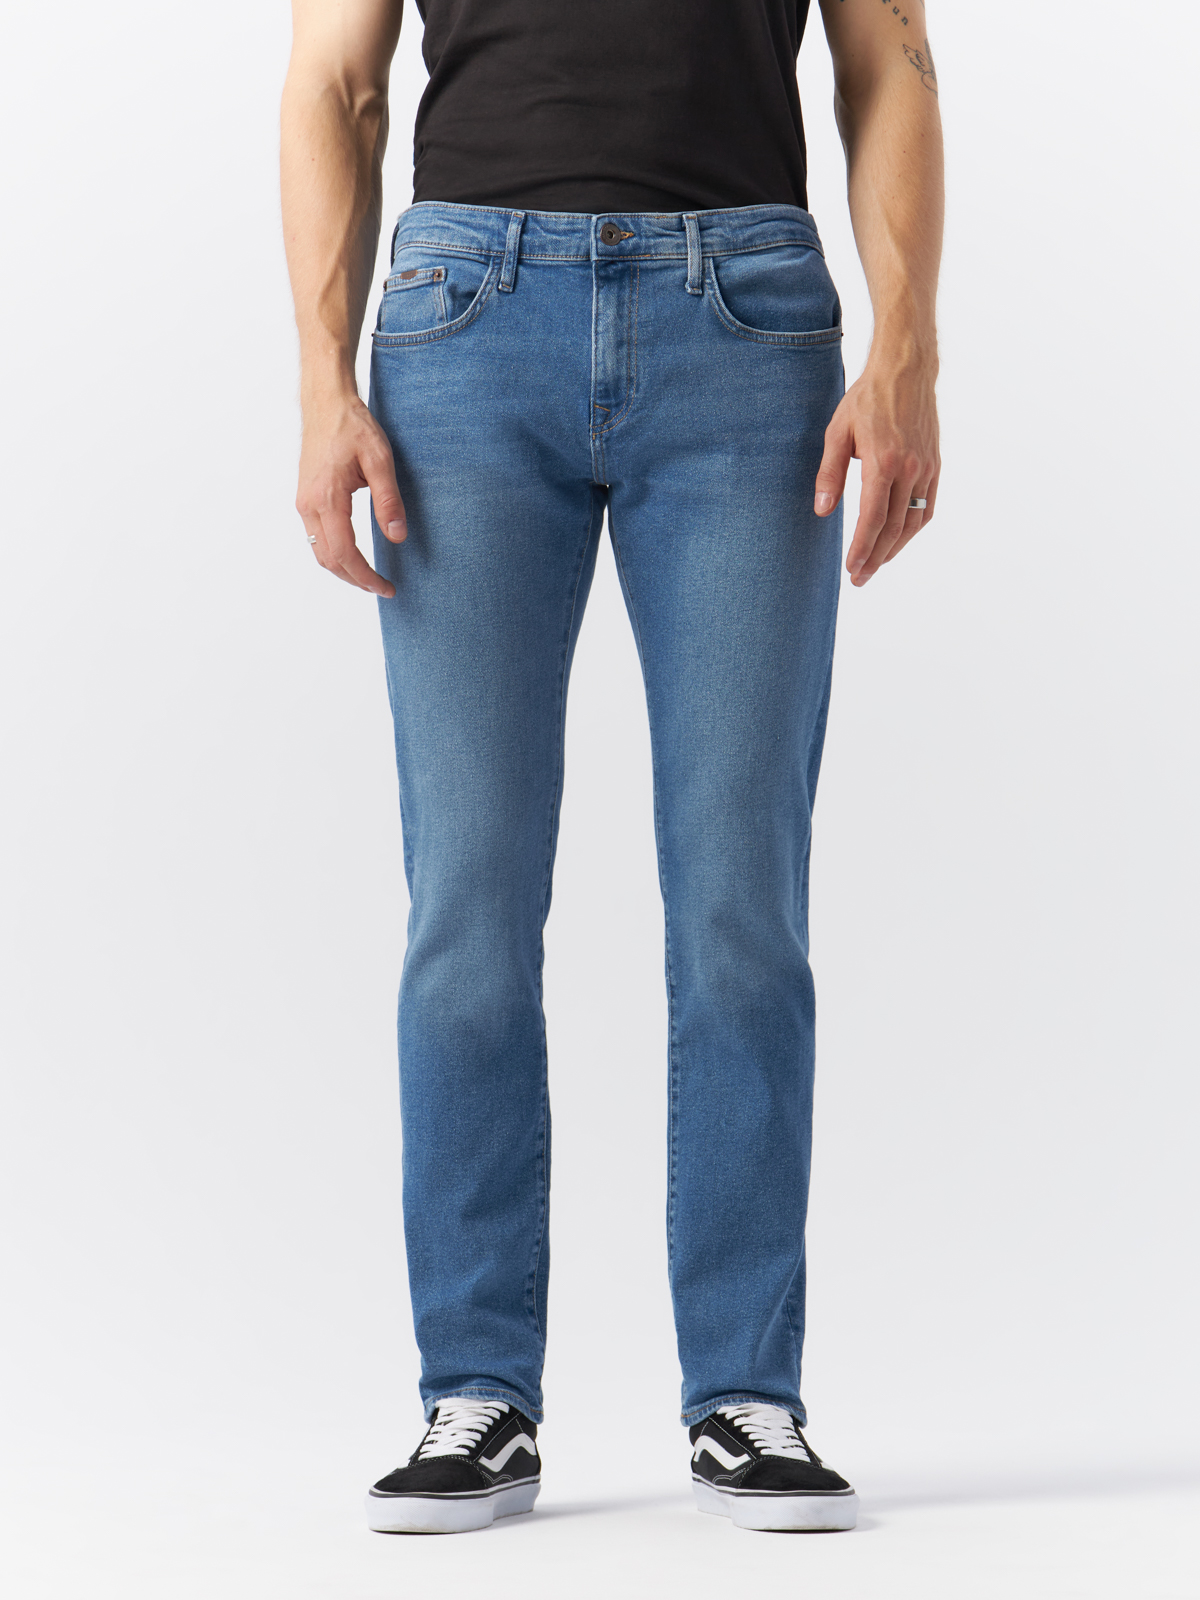 Джинсы Cross Jeans для мужчин, F 152-134, размер 32-32, синие